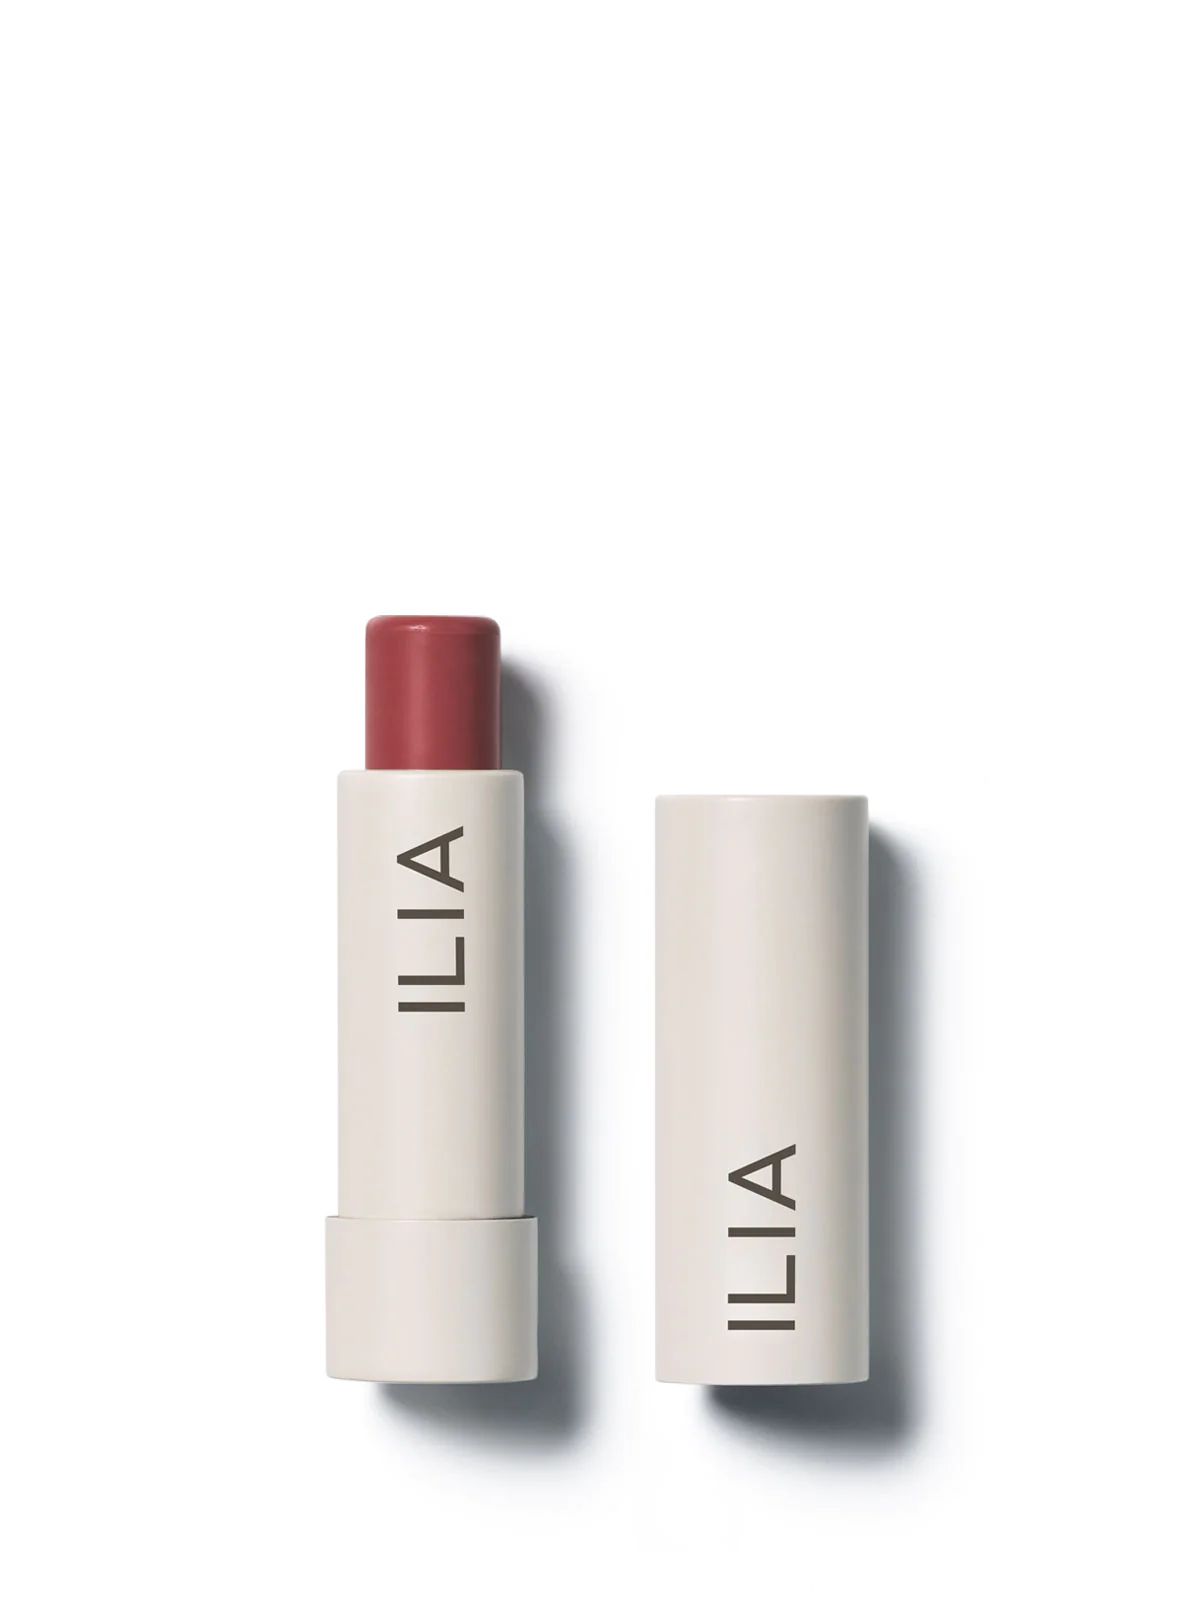 ILIA Balmy Tint: Neutral Pink Nude - Hydrating Lip Balm | ILIA Beauty